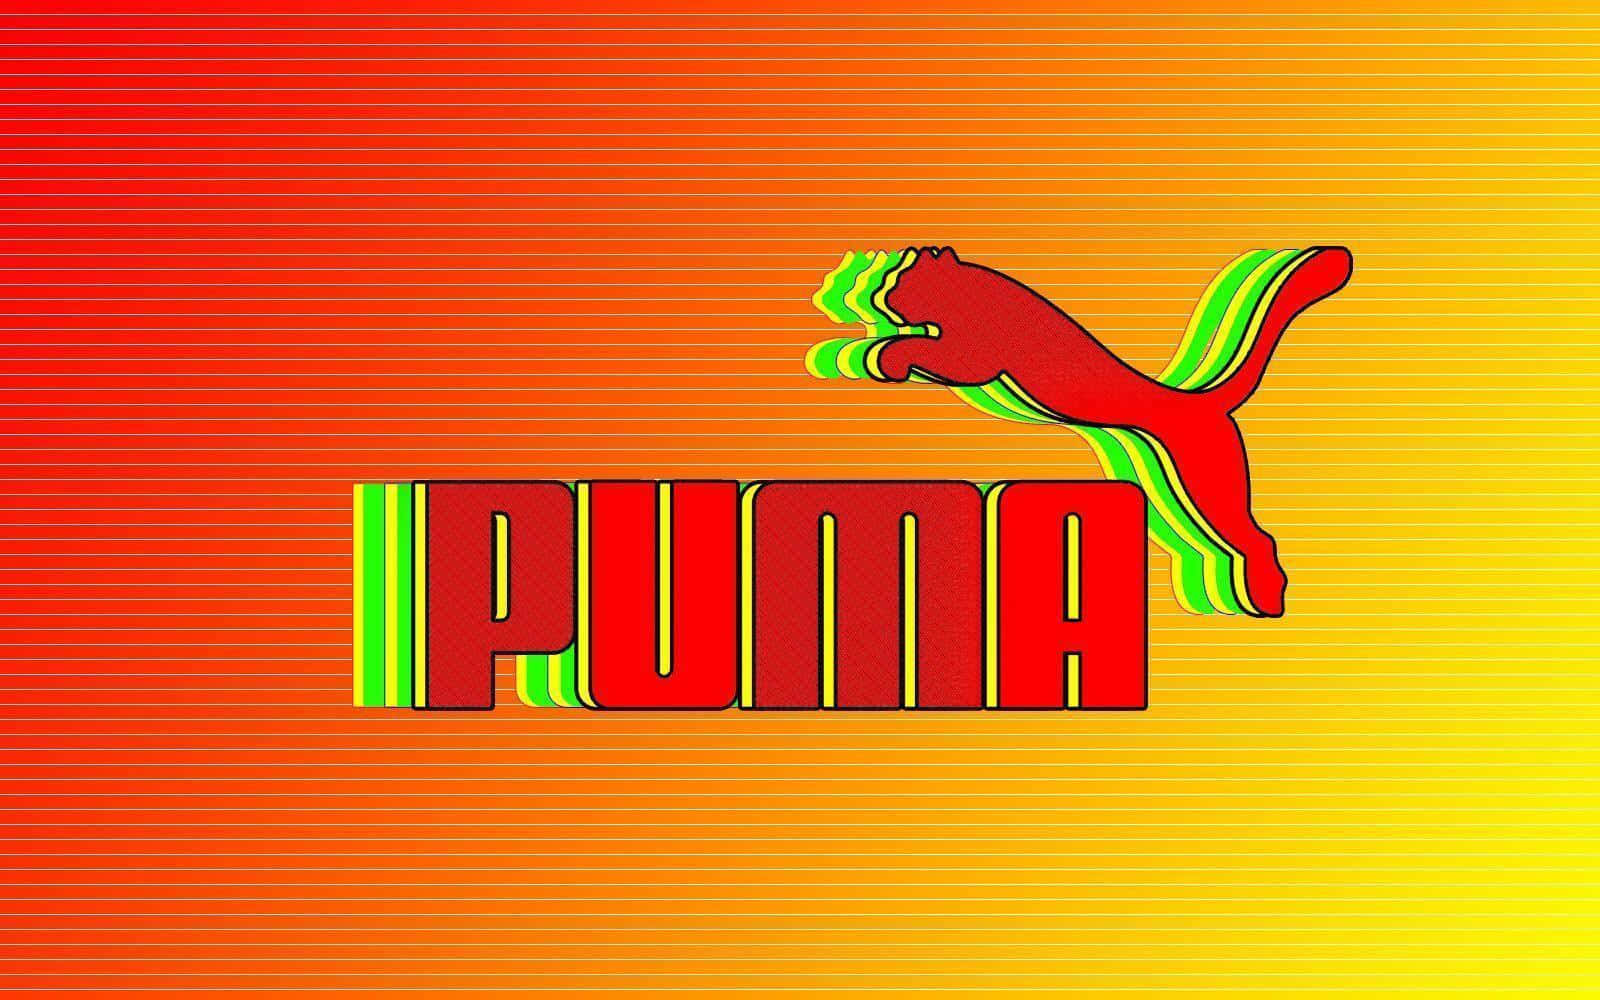 Puma Brand Emblem - Illustration Of Fierce Jumping Cat Wallpaper